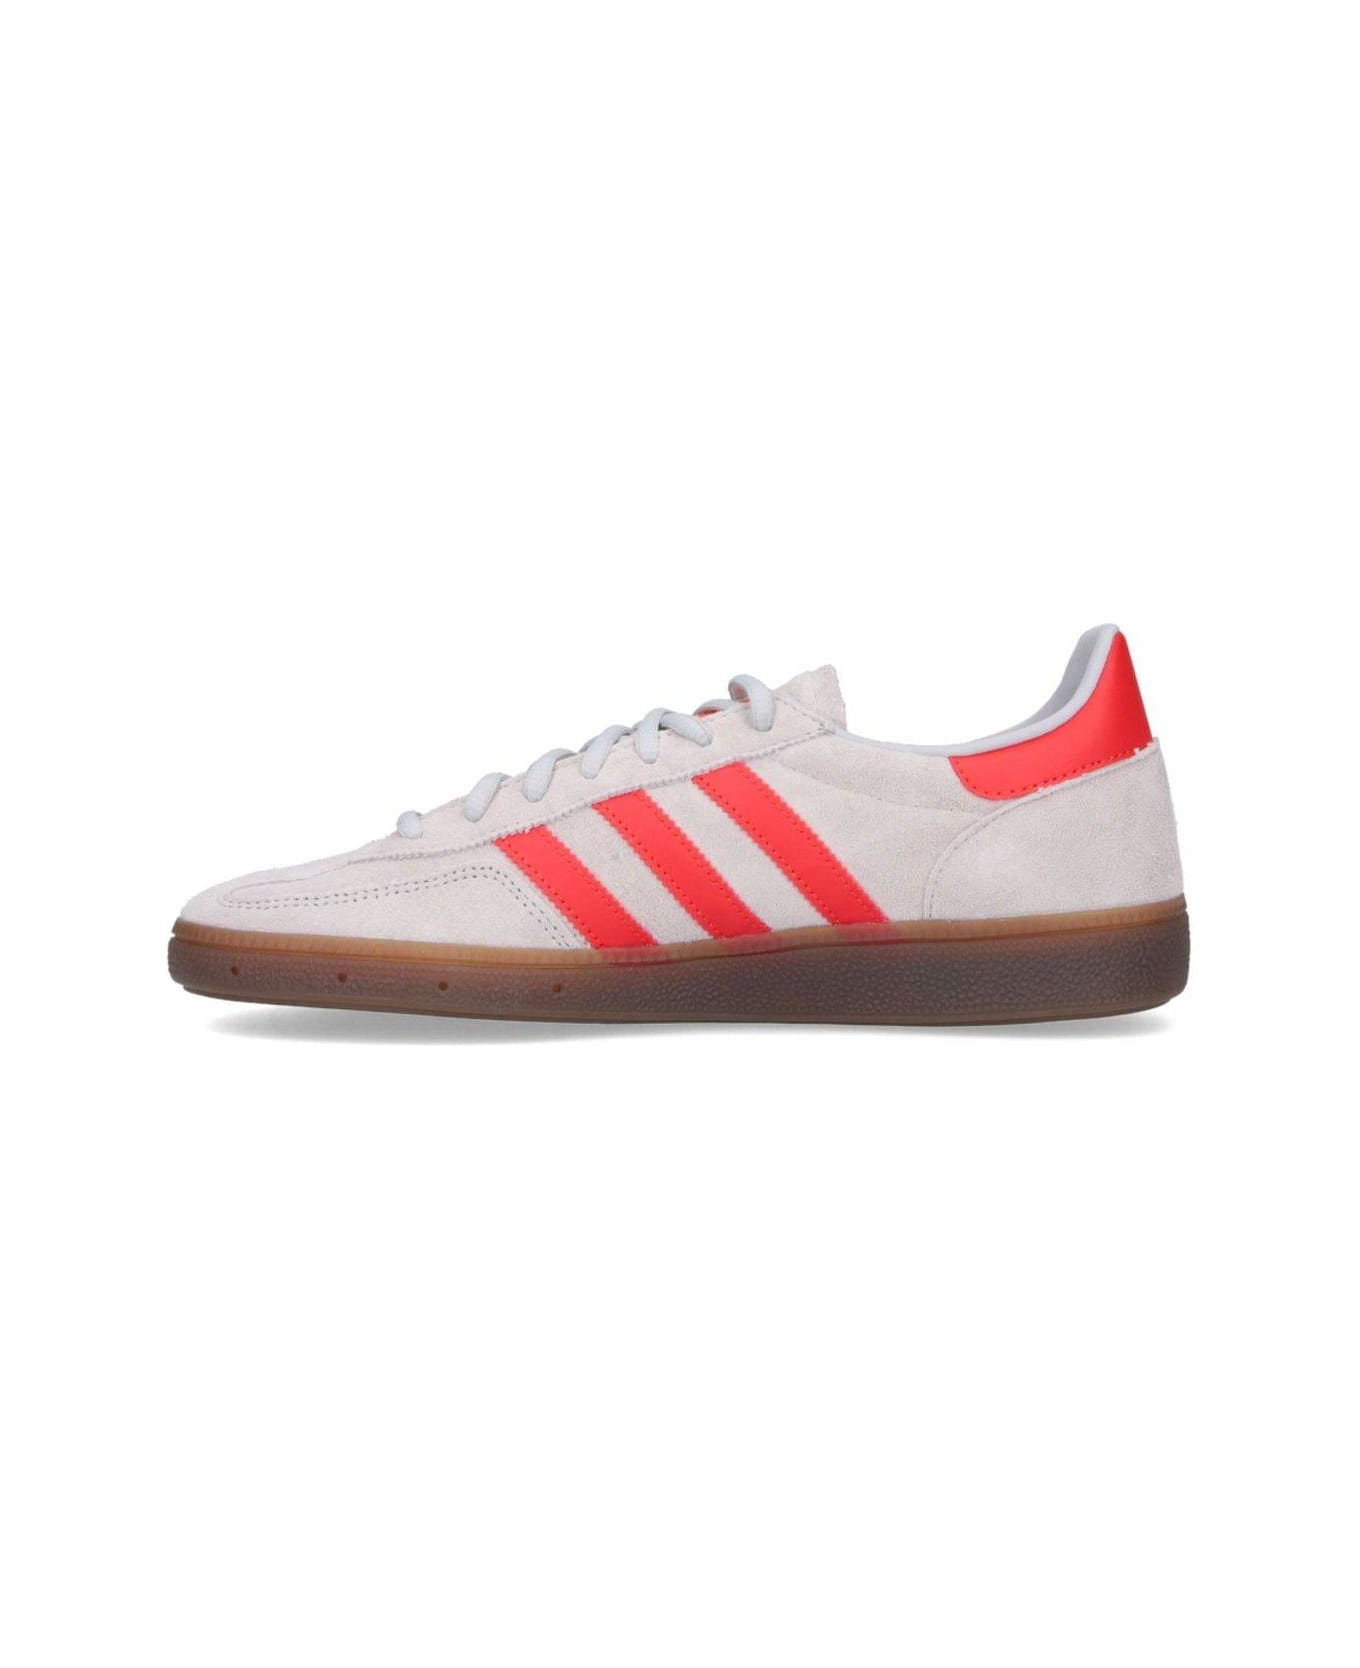 Adidas Originals Handball Spezial Low-top Sneakers - Gretwo/hirere/goldmt